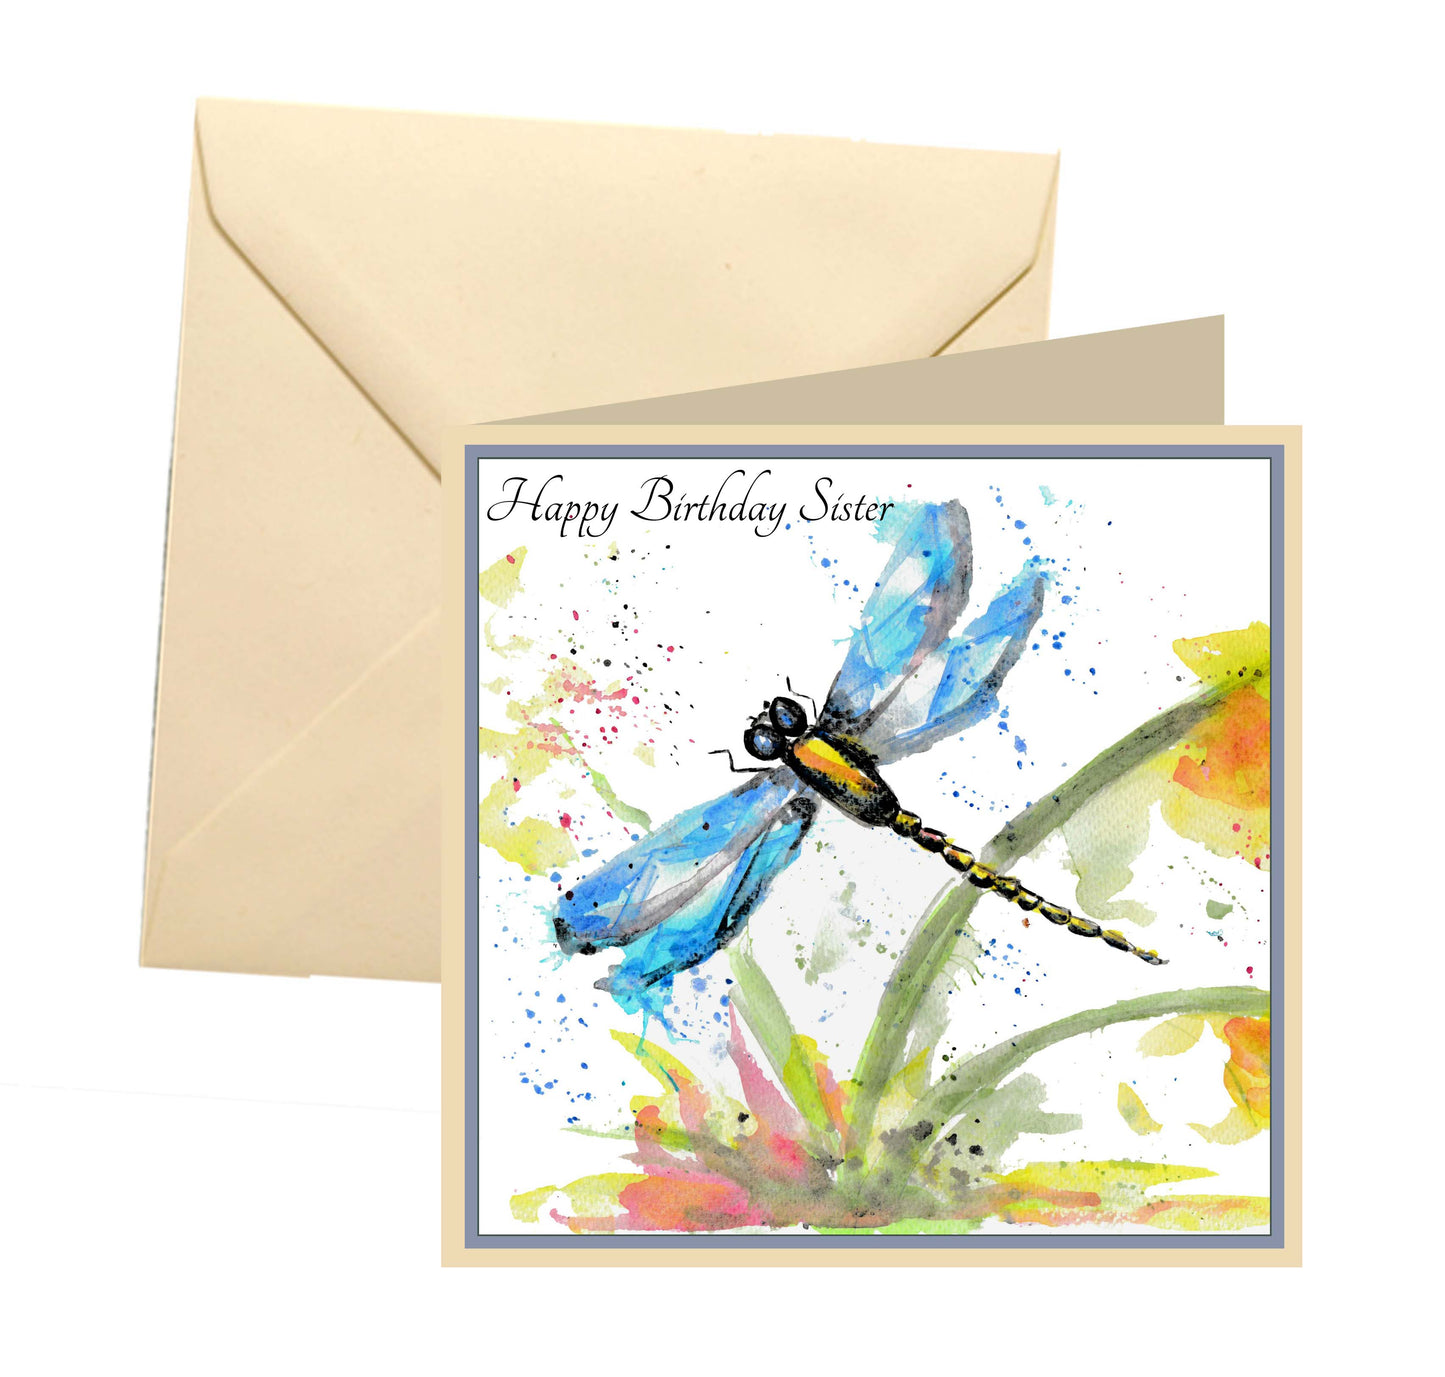 Sister dragonfly birthday card